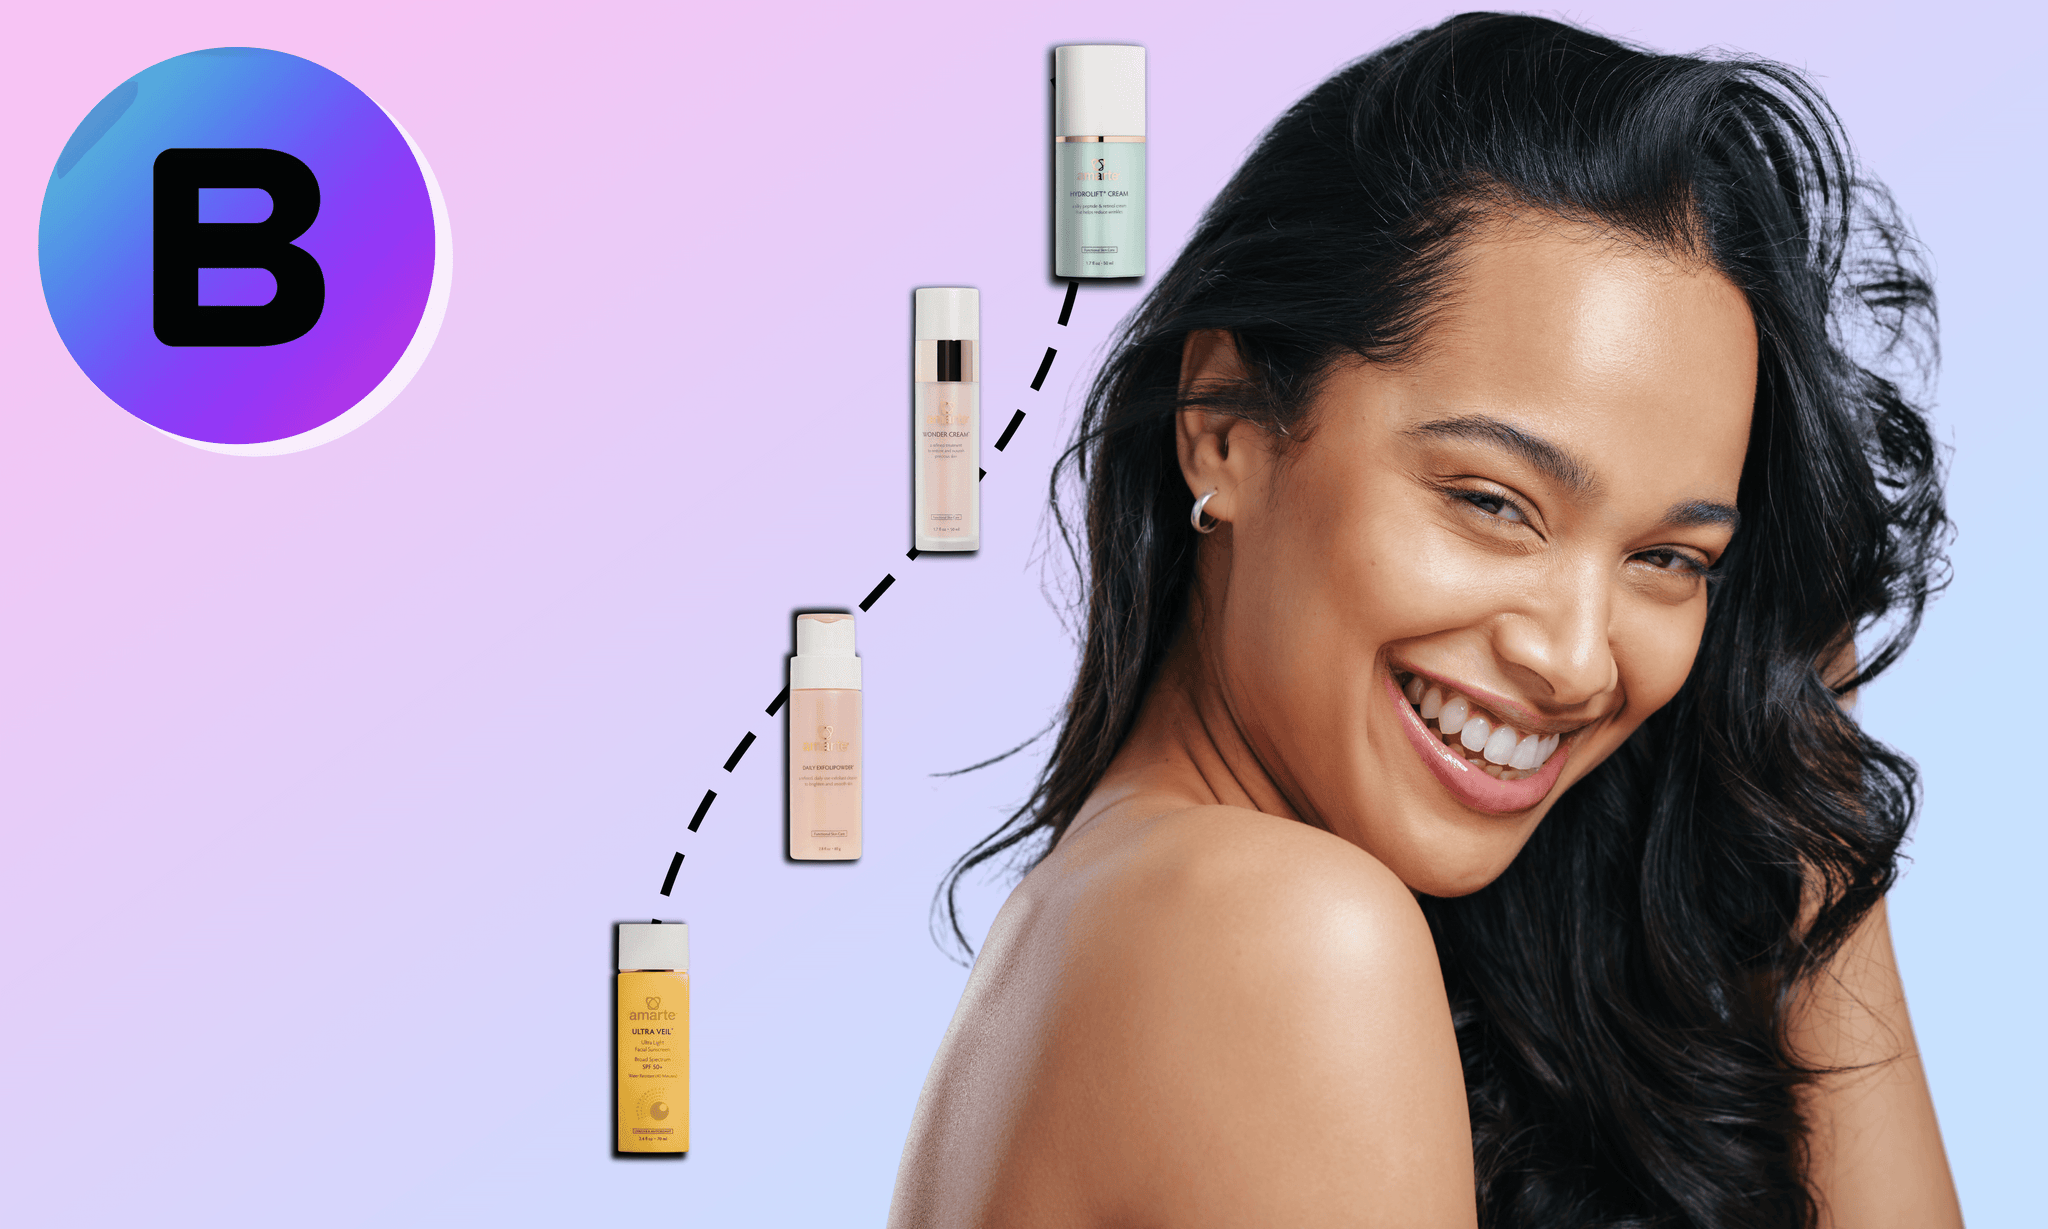 Introducing Amarte Skin Care at BeautyFix